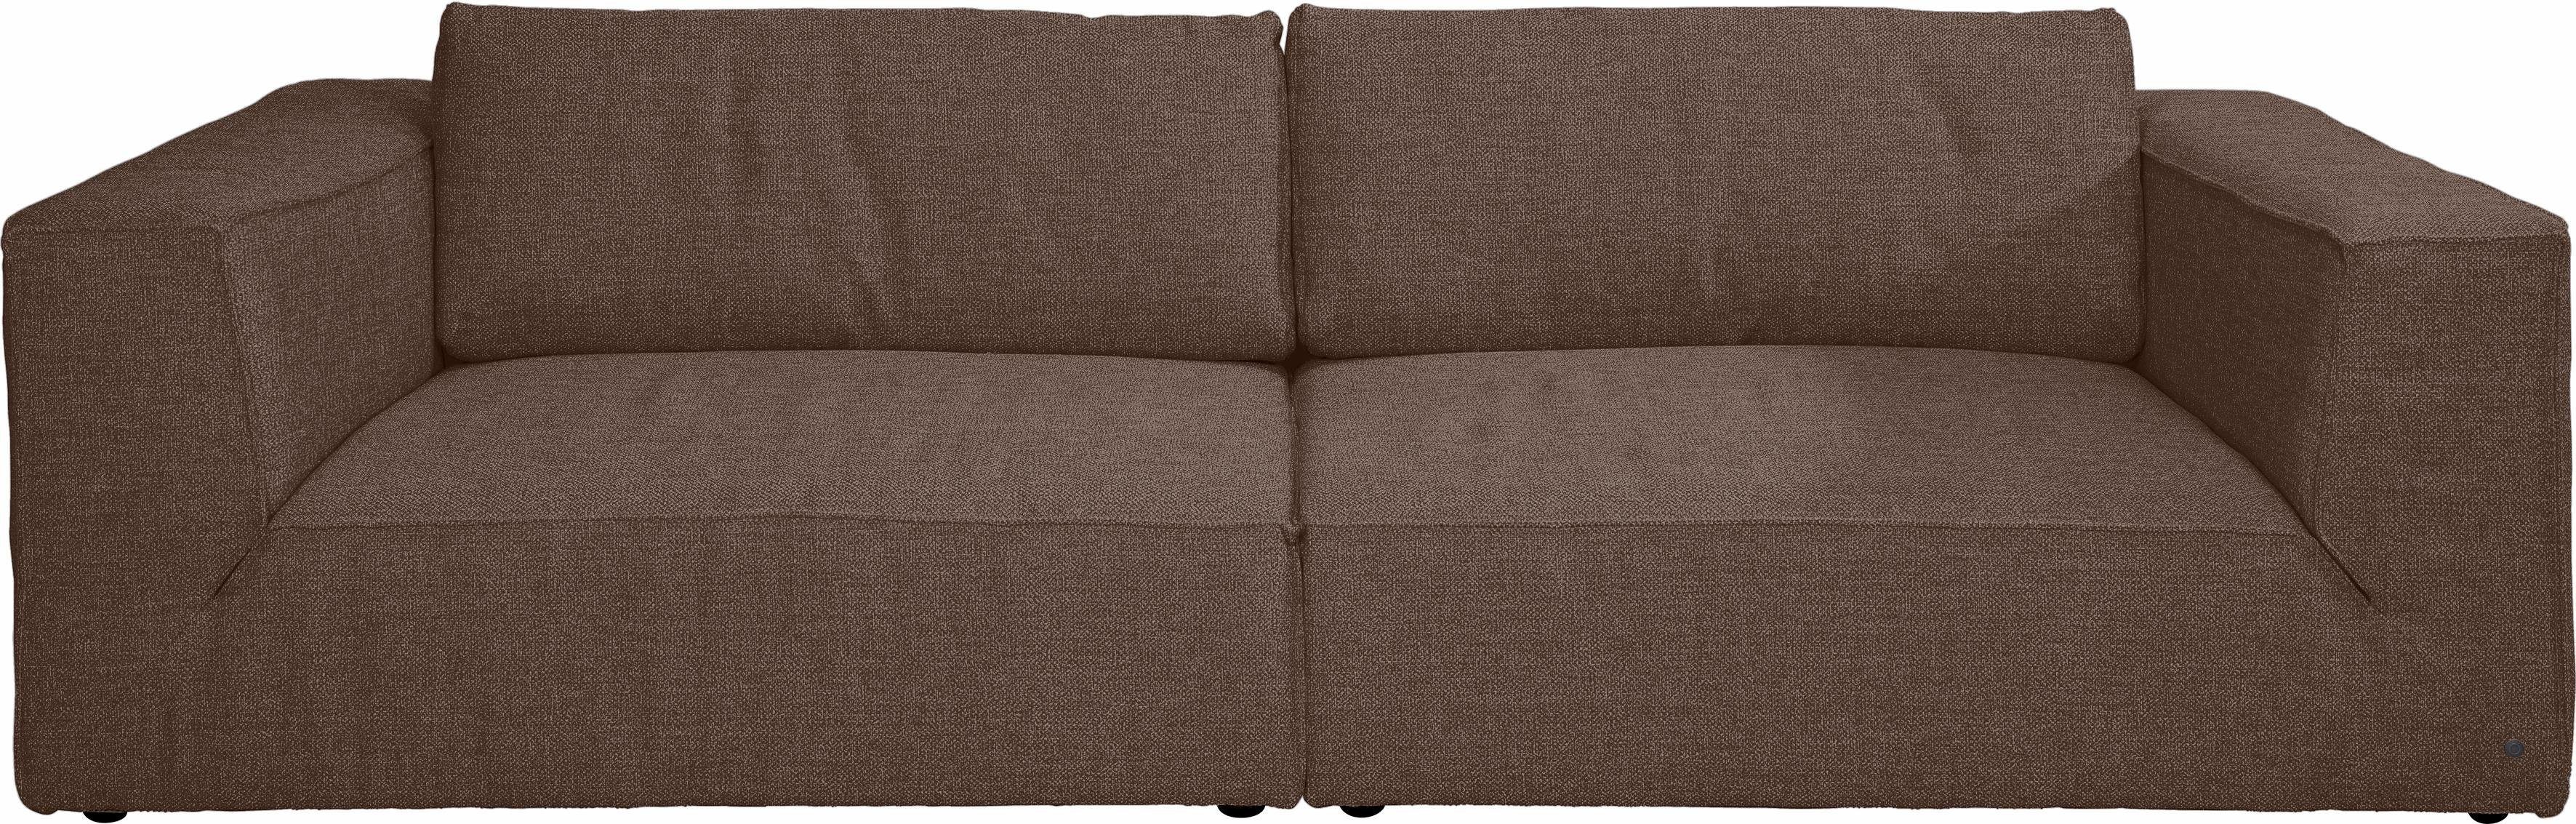 Big-Sofa Breite mit TOM cm große TAILOR extra TBO 12 STYLE, brown HOME coconut bequemen BIG Sitztiefe, Stegkissen, 240 CUBE